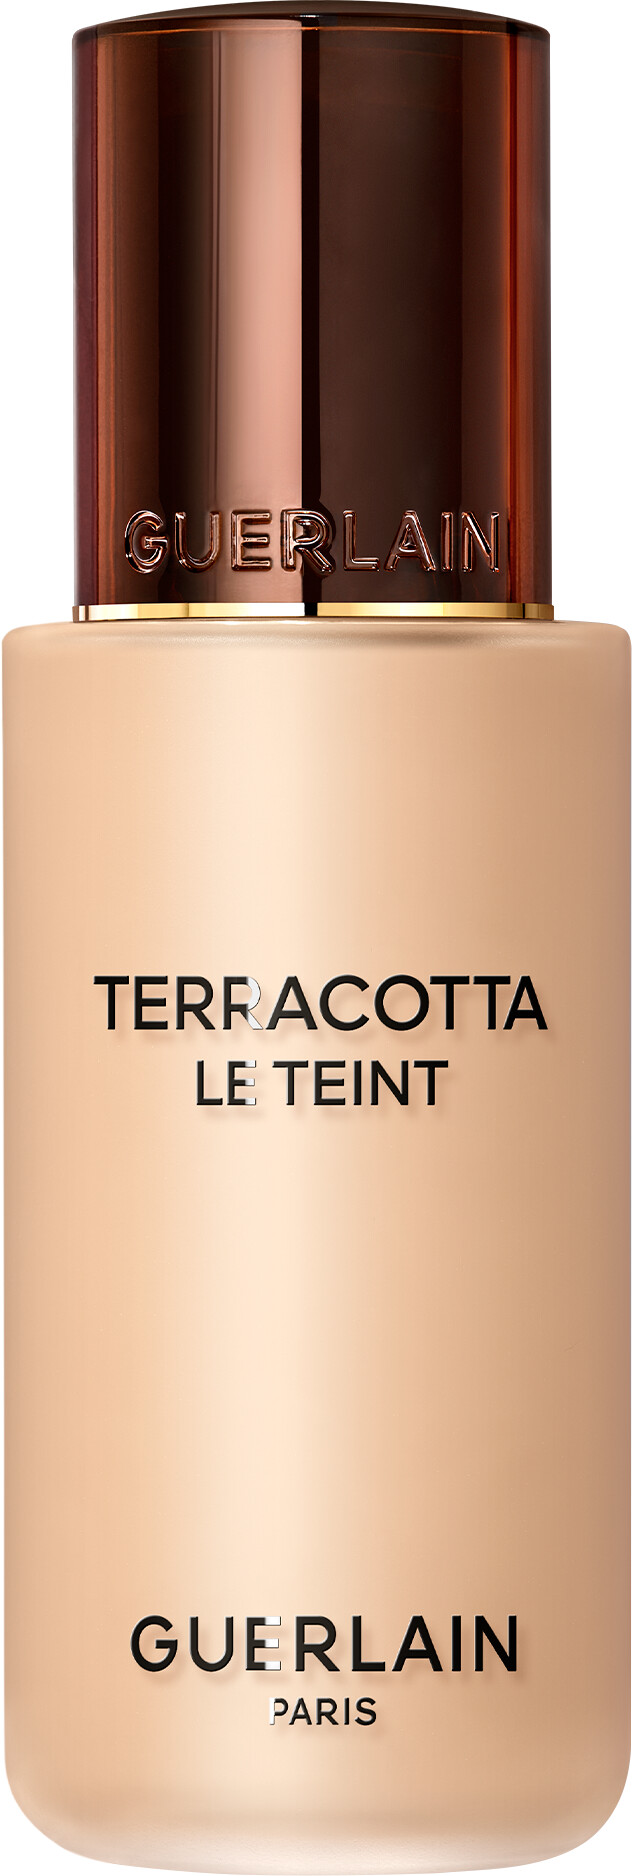 GUERLAIN Terracotta Le Teint Healthy Glow Foundation 35ml 2W - Warm/Dore